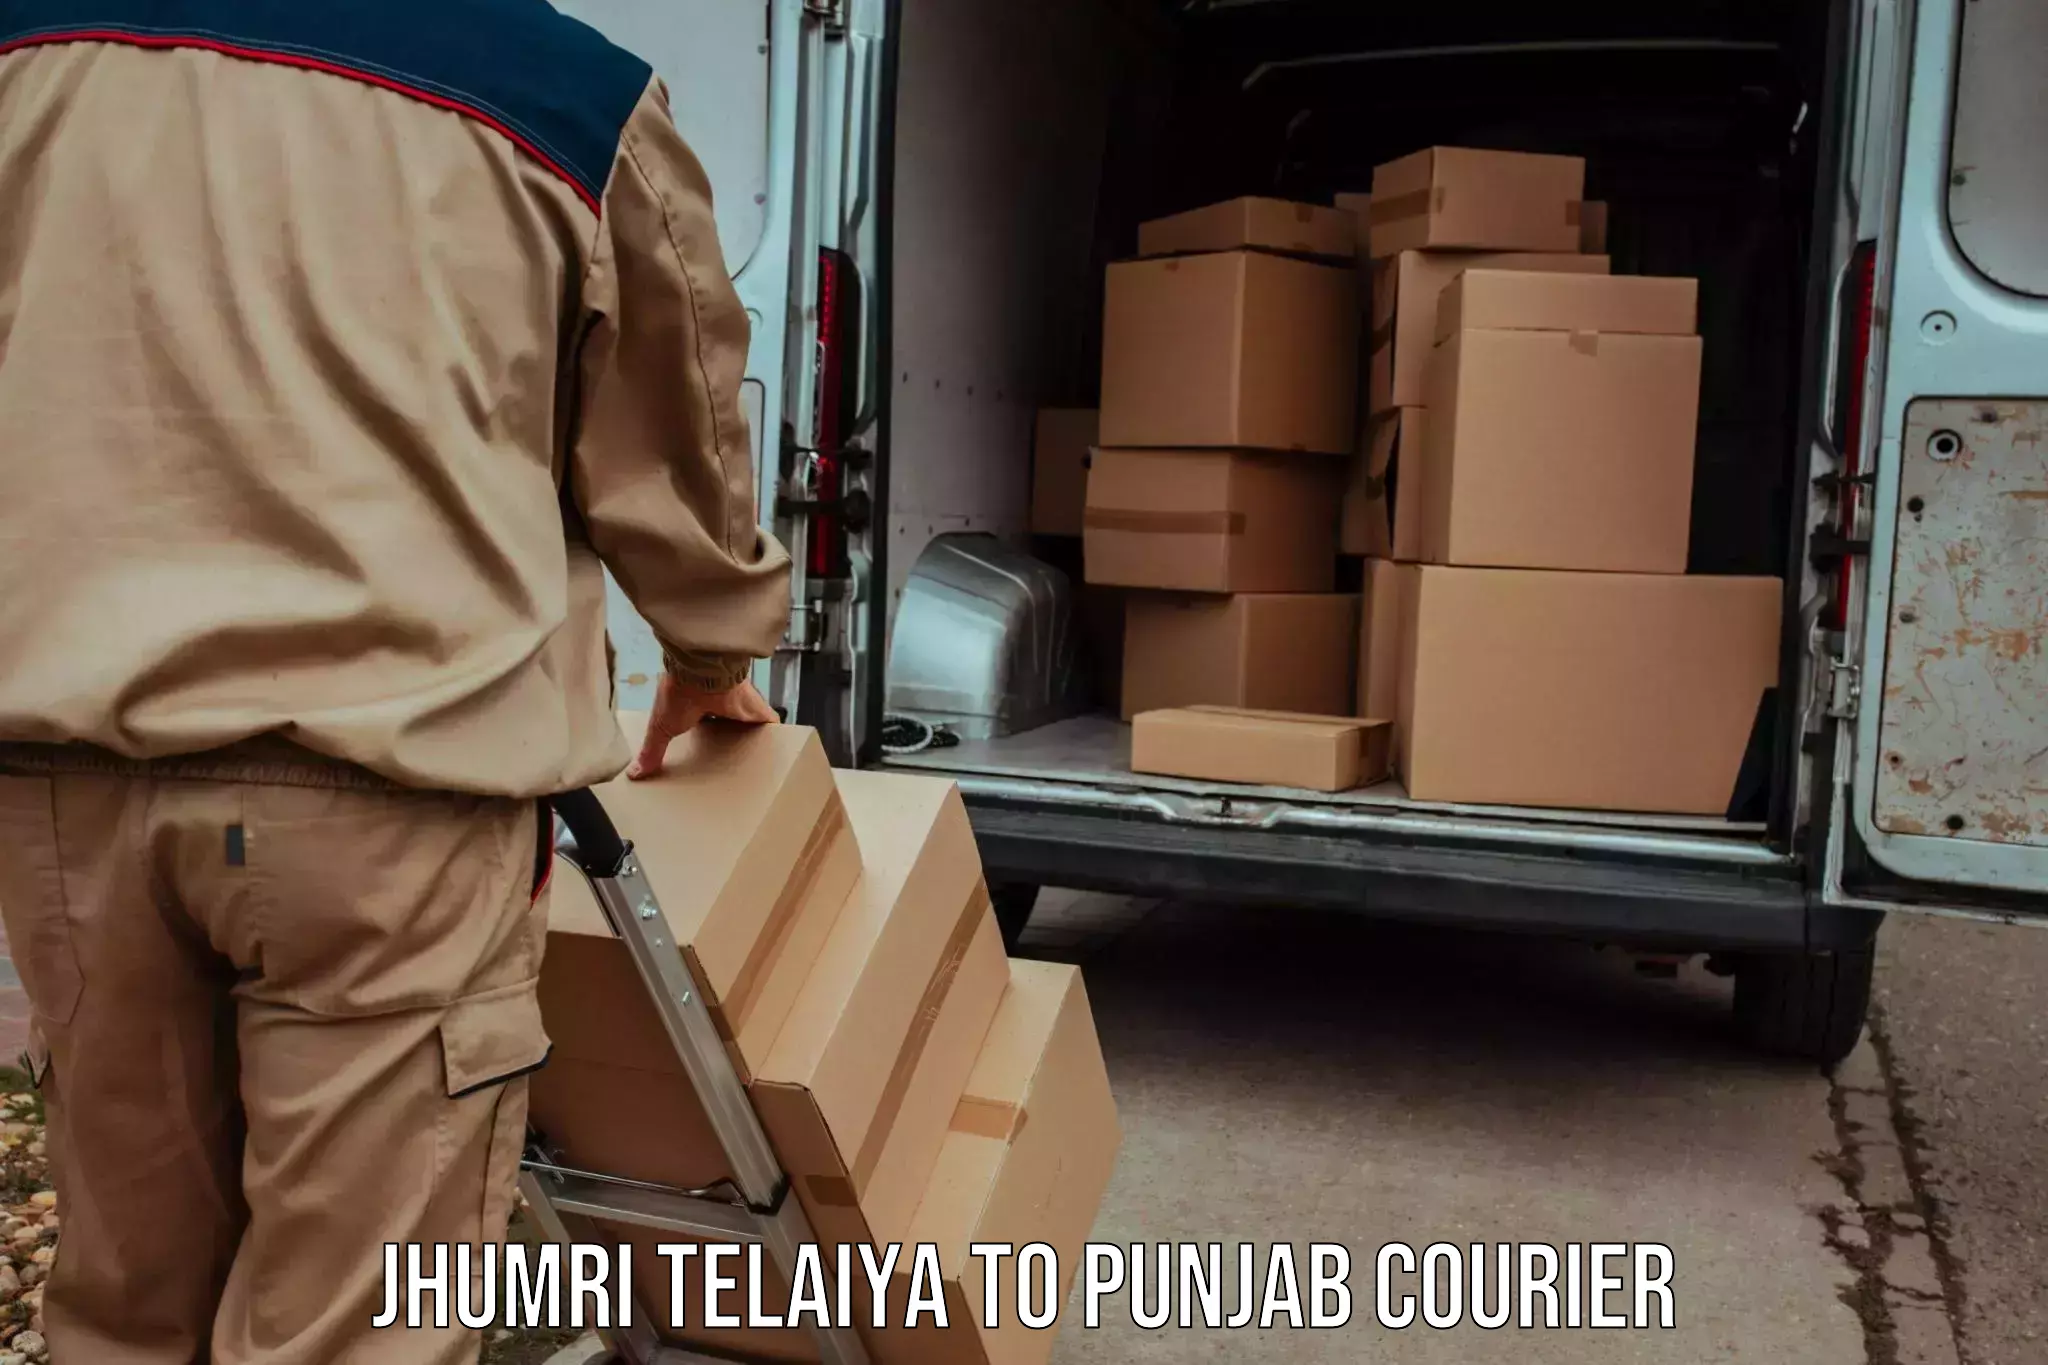 Professional courier handling Jhumri Telaiya to Mohali